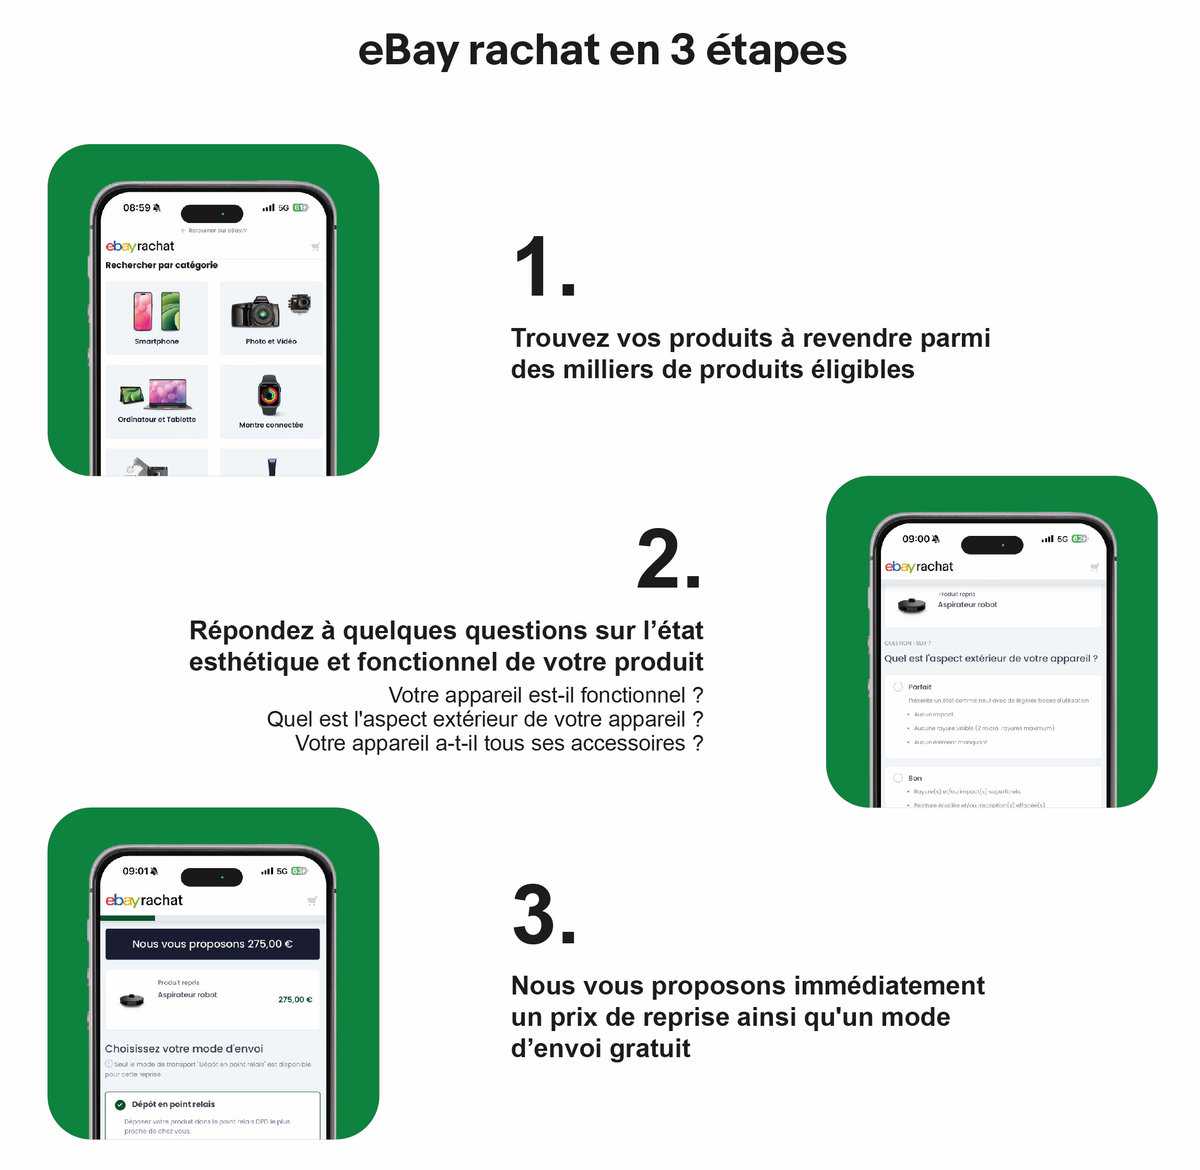 eBay法国站推出商品回购服务eBay Buyback